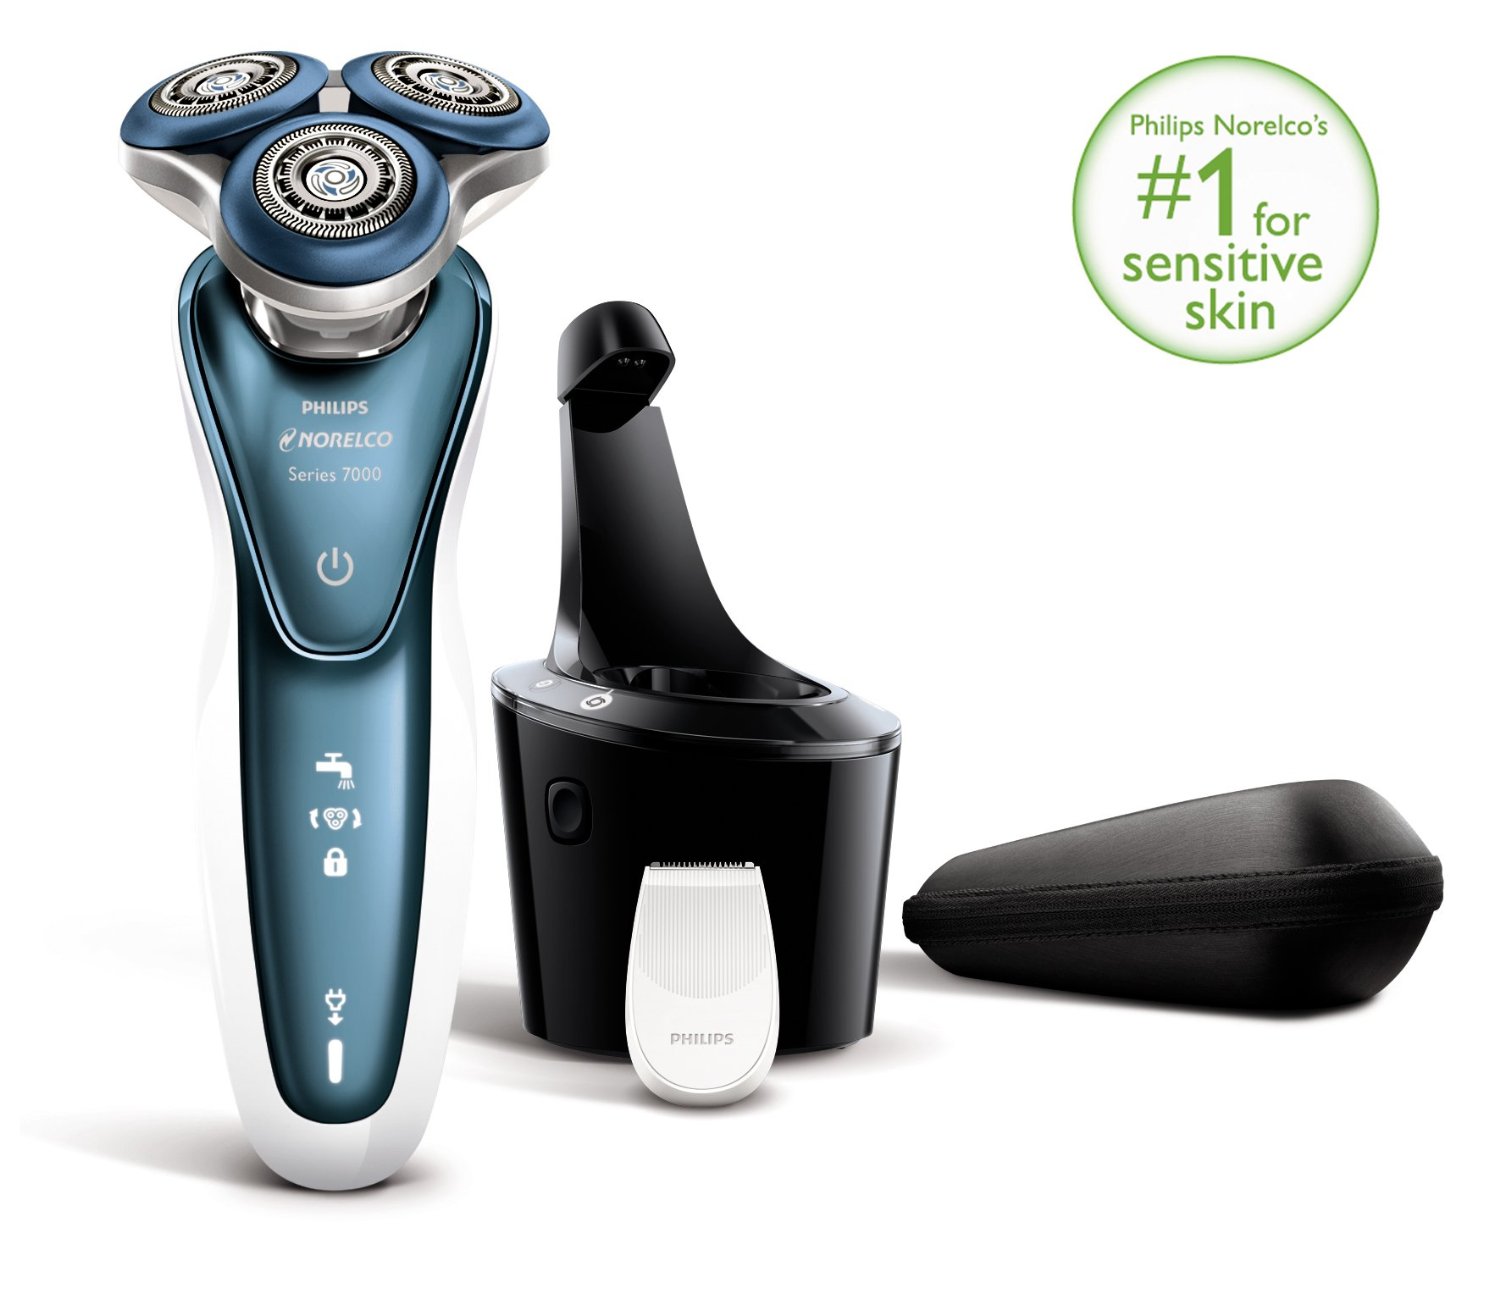 philips-norelco-shaver-7300-for-sensitive-skin-review-2 - Best Men's Shaver